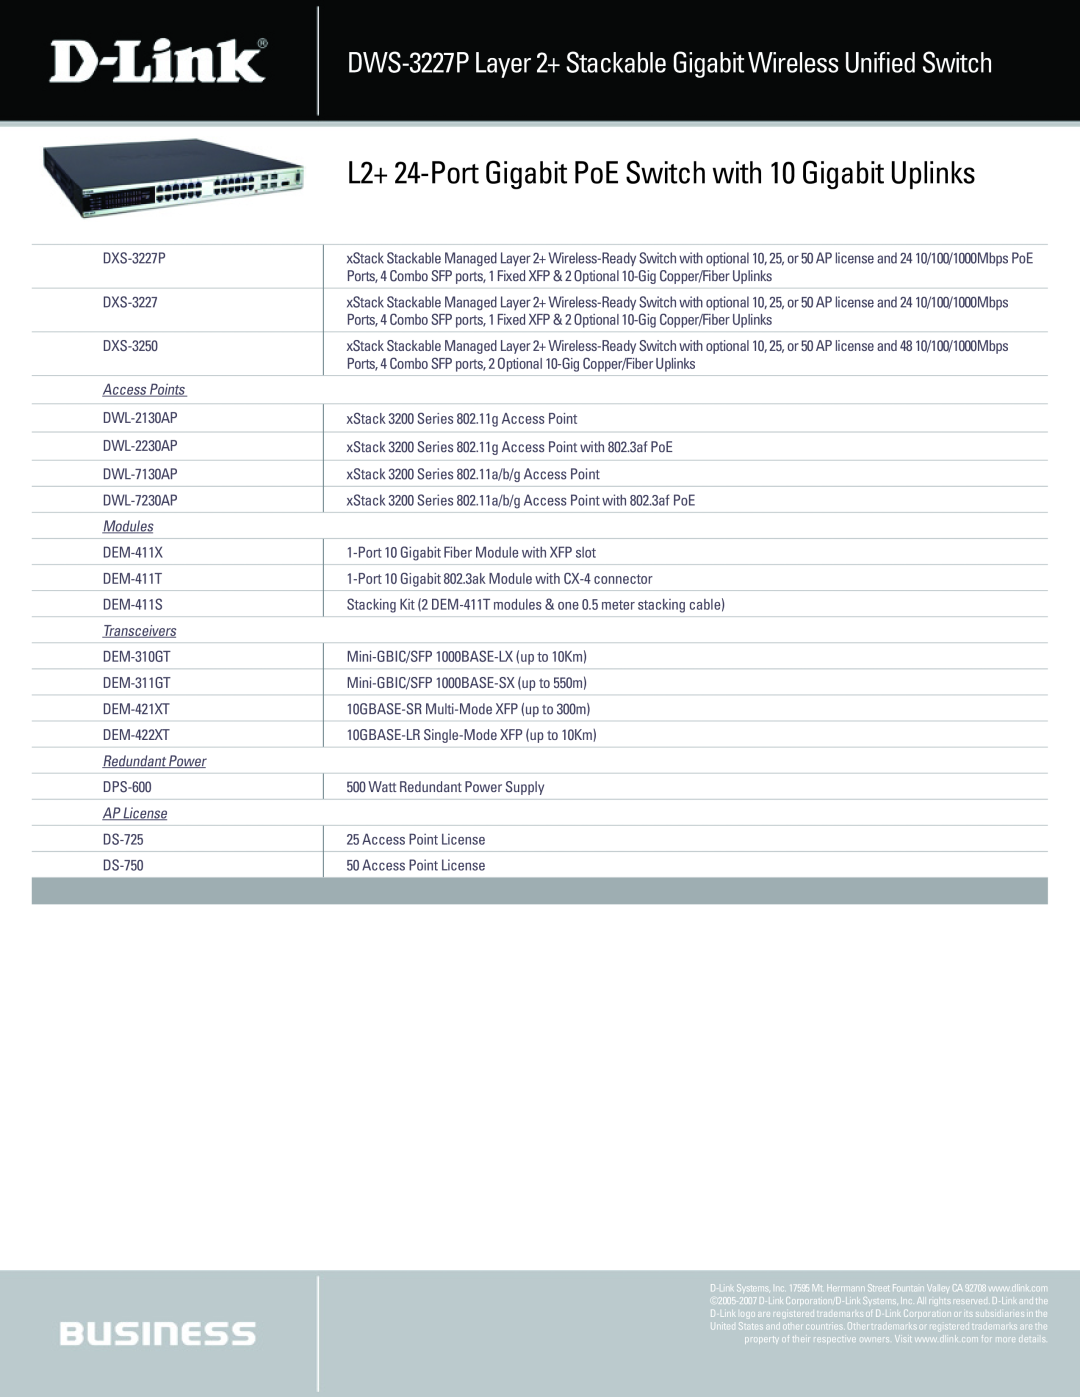 D-Link DWS-3227 L2+ 24-Port Gigabit PoE Switch with 10 Gigabit Uplinks, Access Points, Modules, Transceivers, AP License 